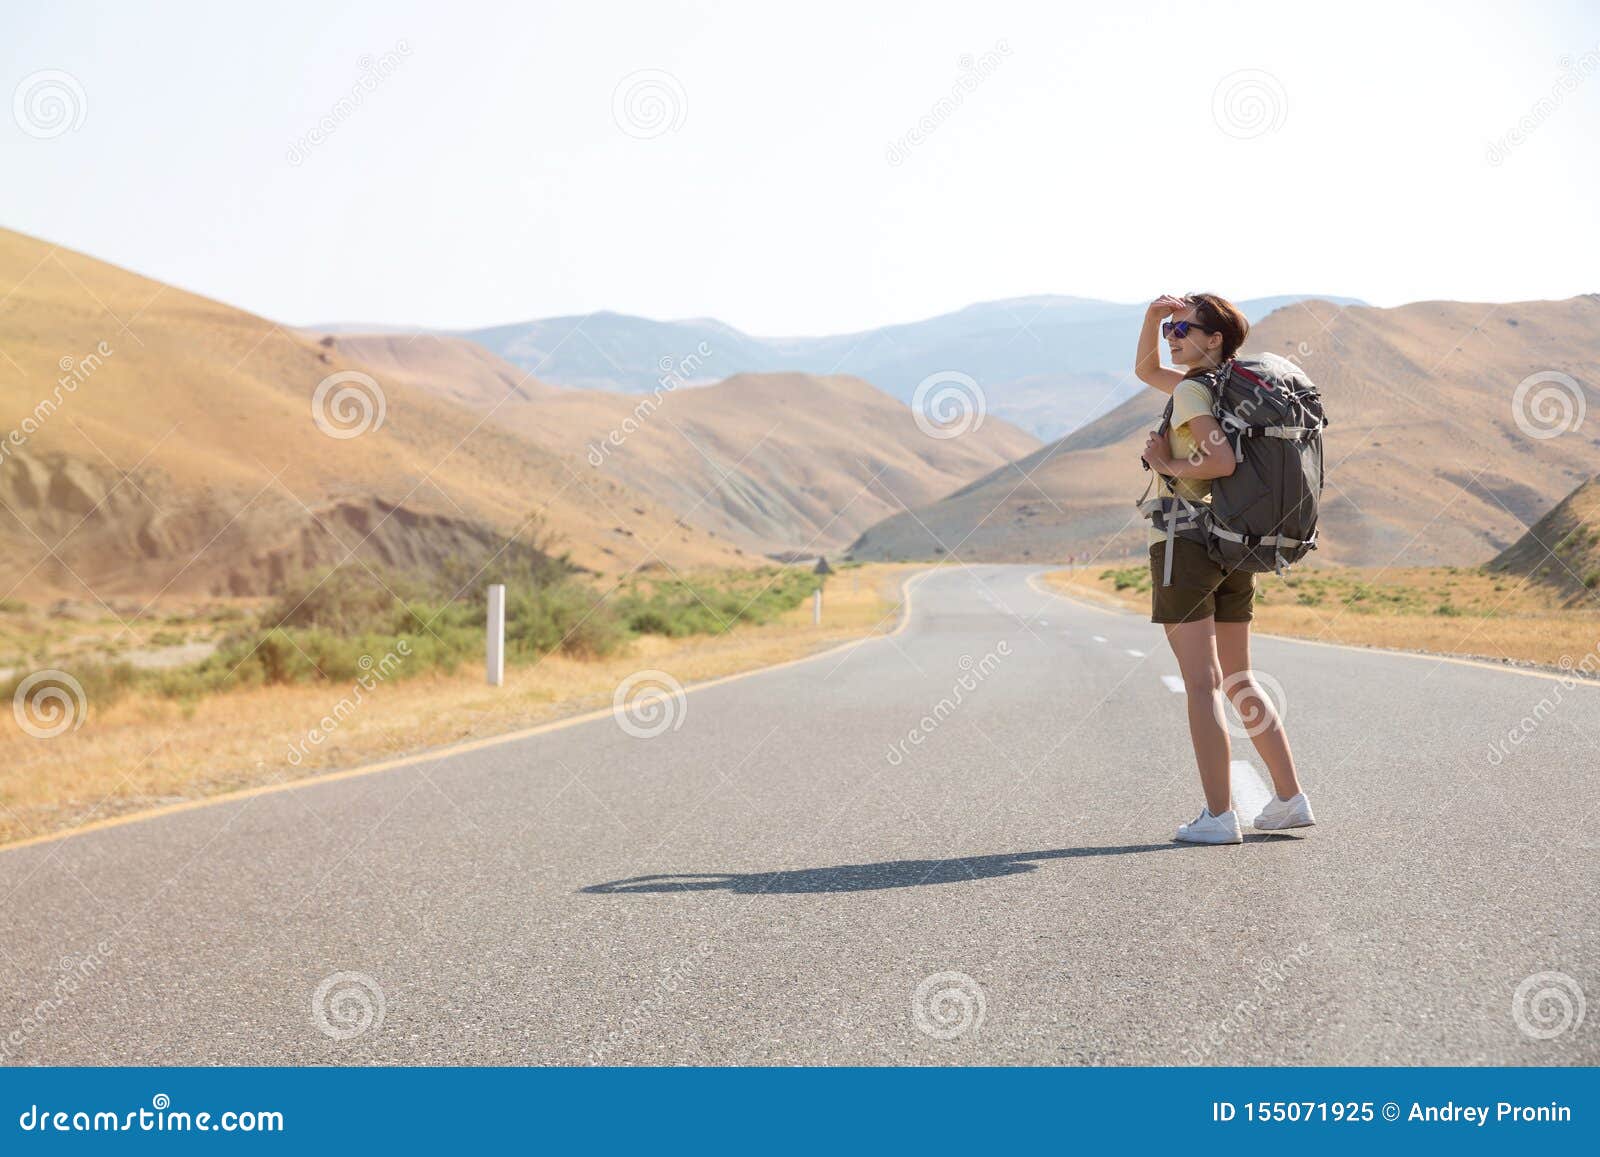 traveller on road